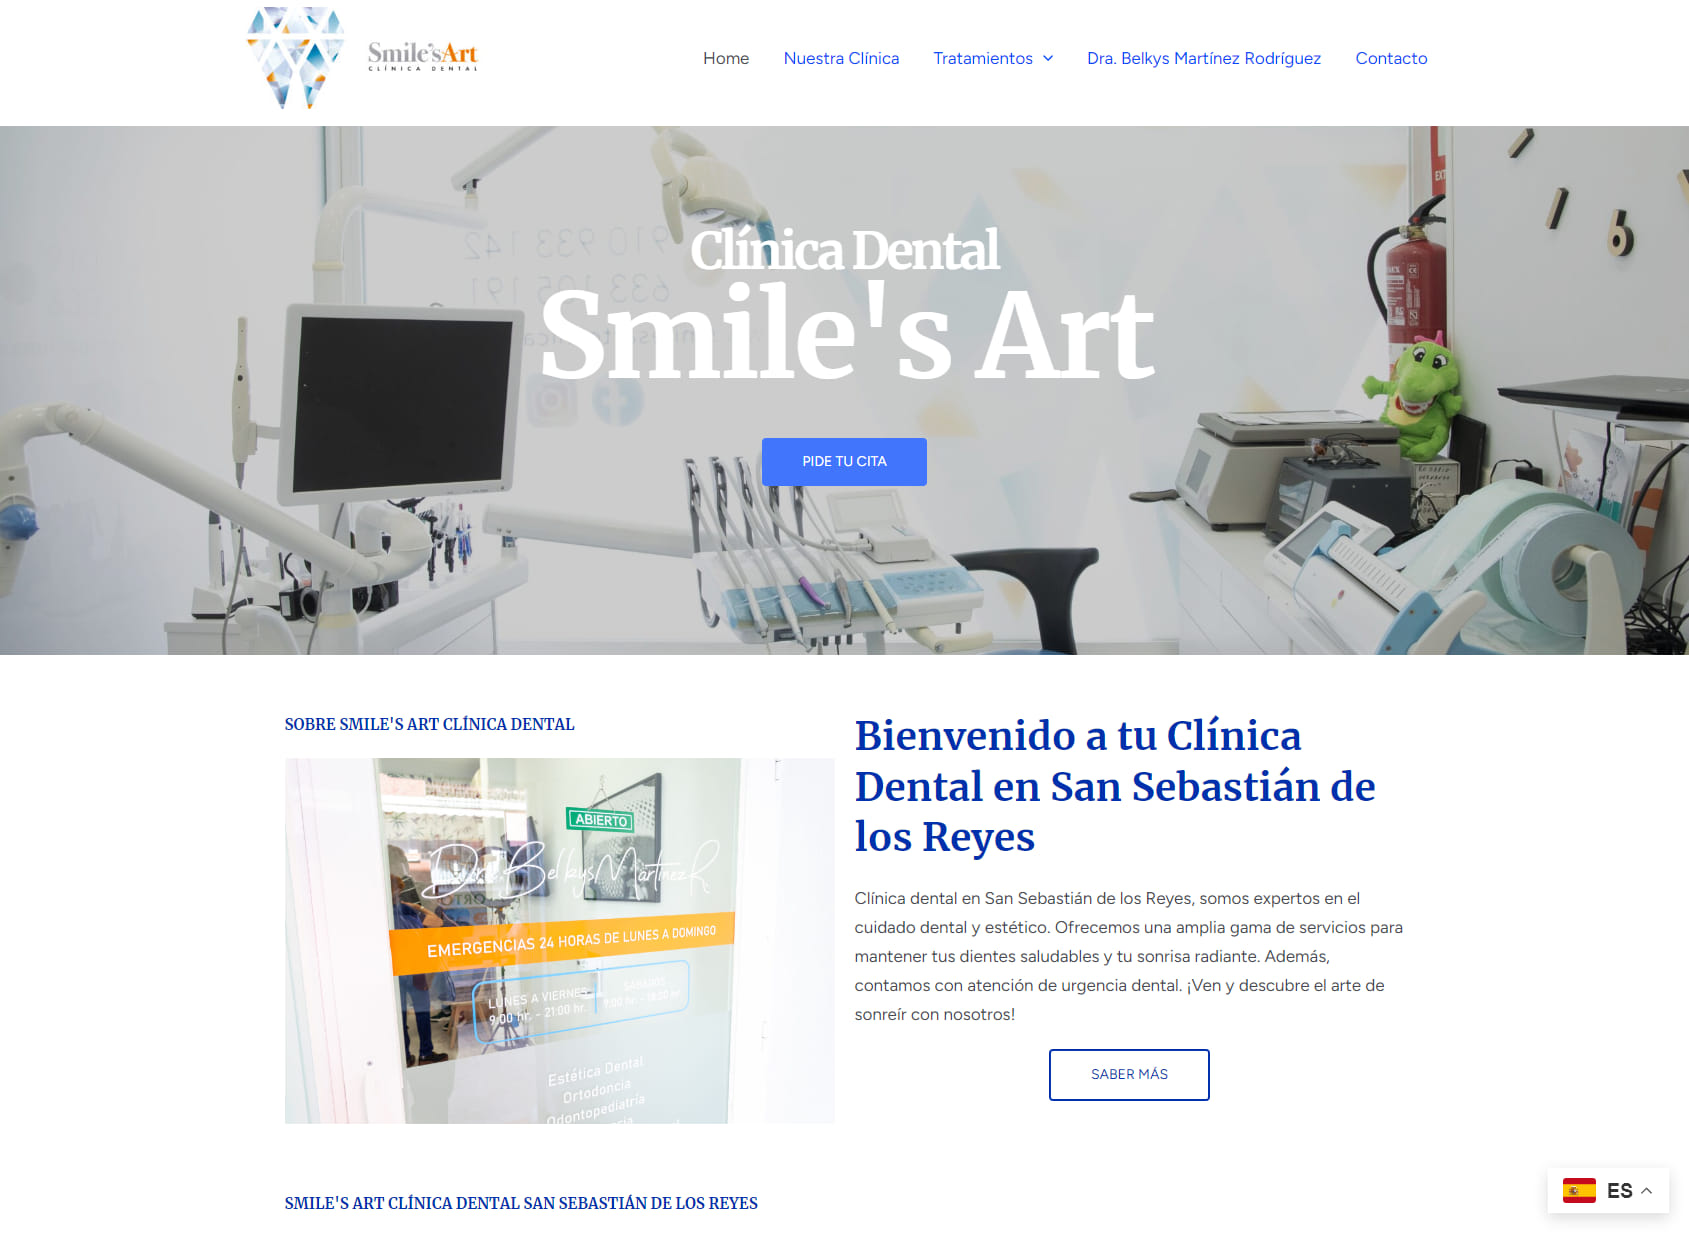 Smile's Art Clínica Dental